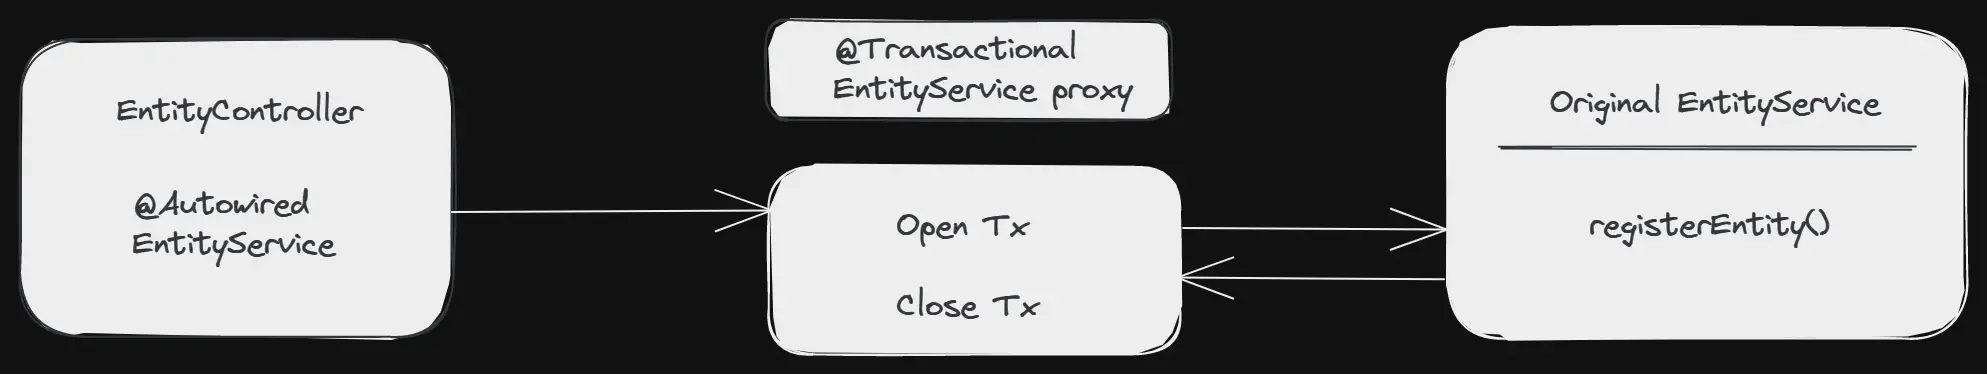 Transactional proxy